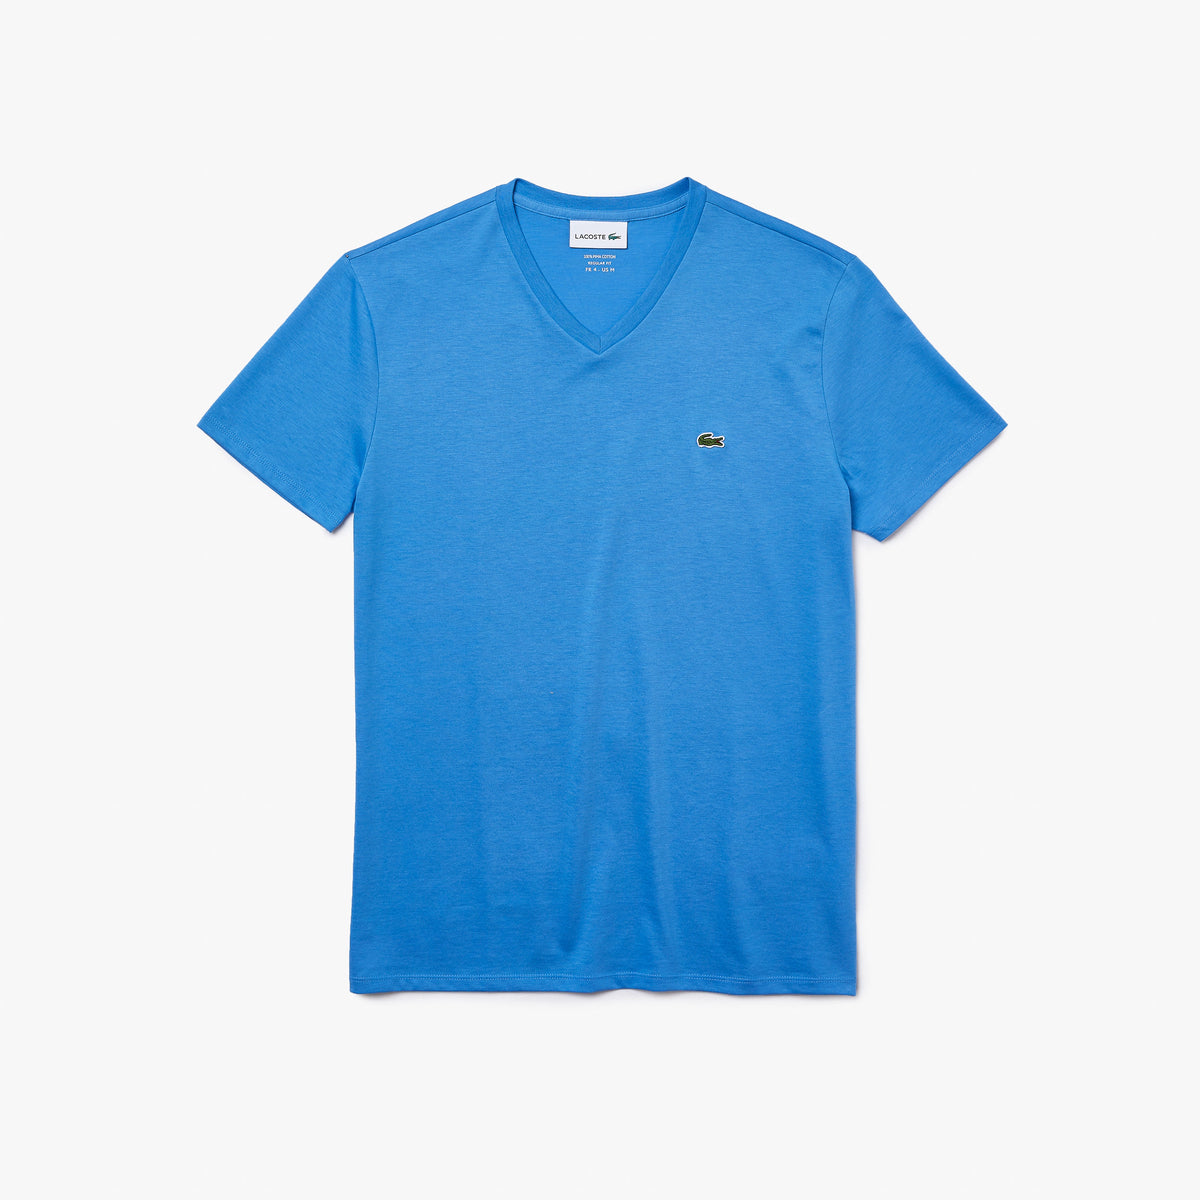 Men's V-neck Pima Cotton Jersey T-shirt - Blue L99